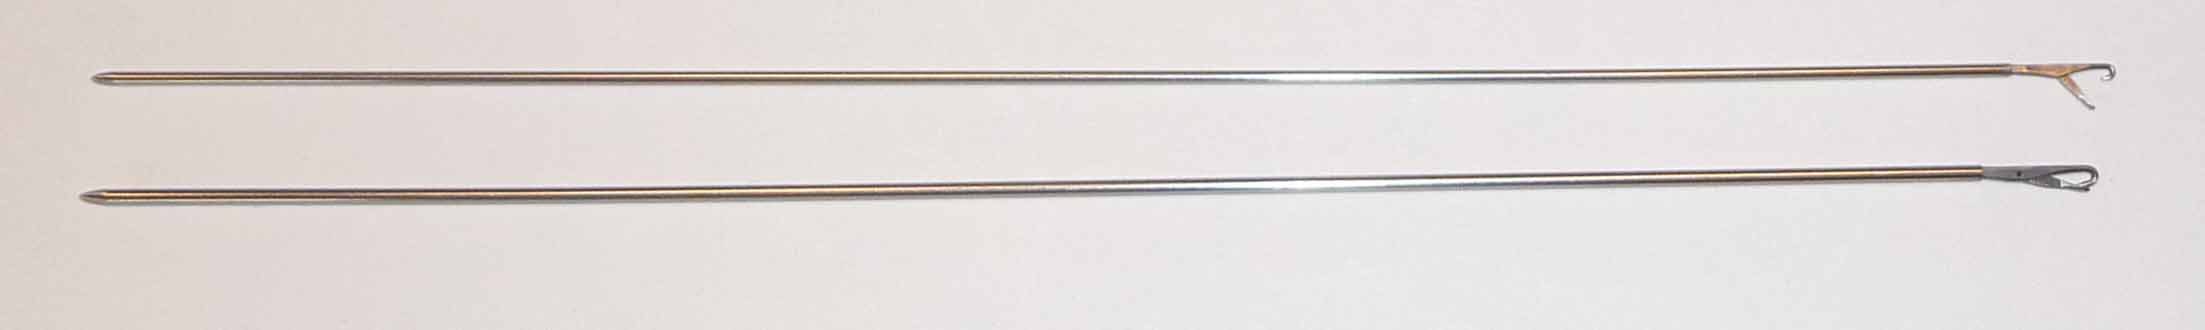 DaHo Reverse Latch Splicing Needles